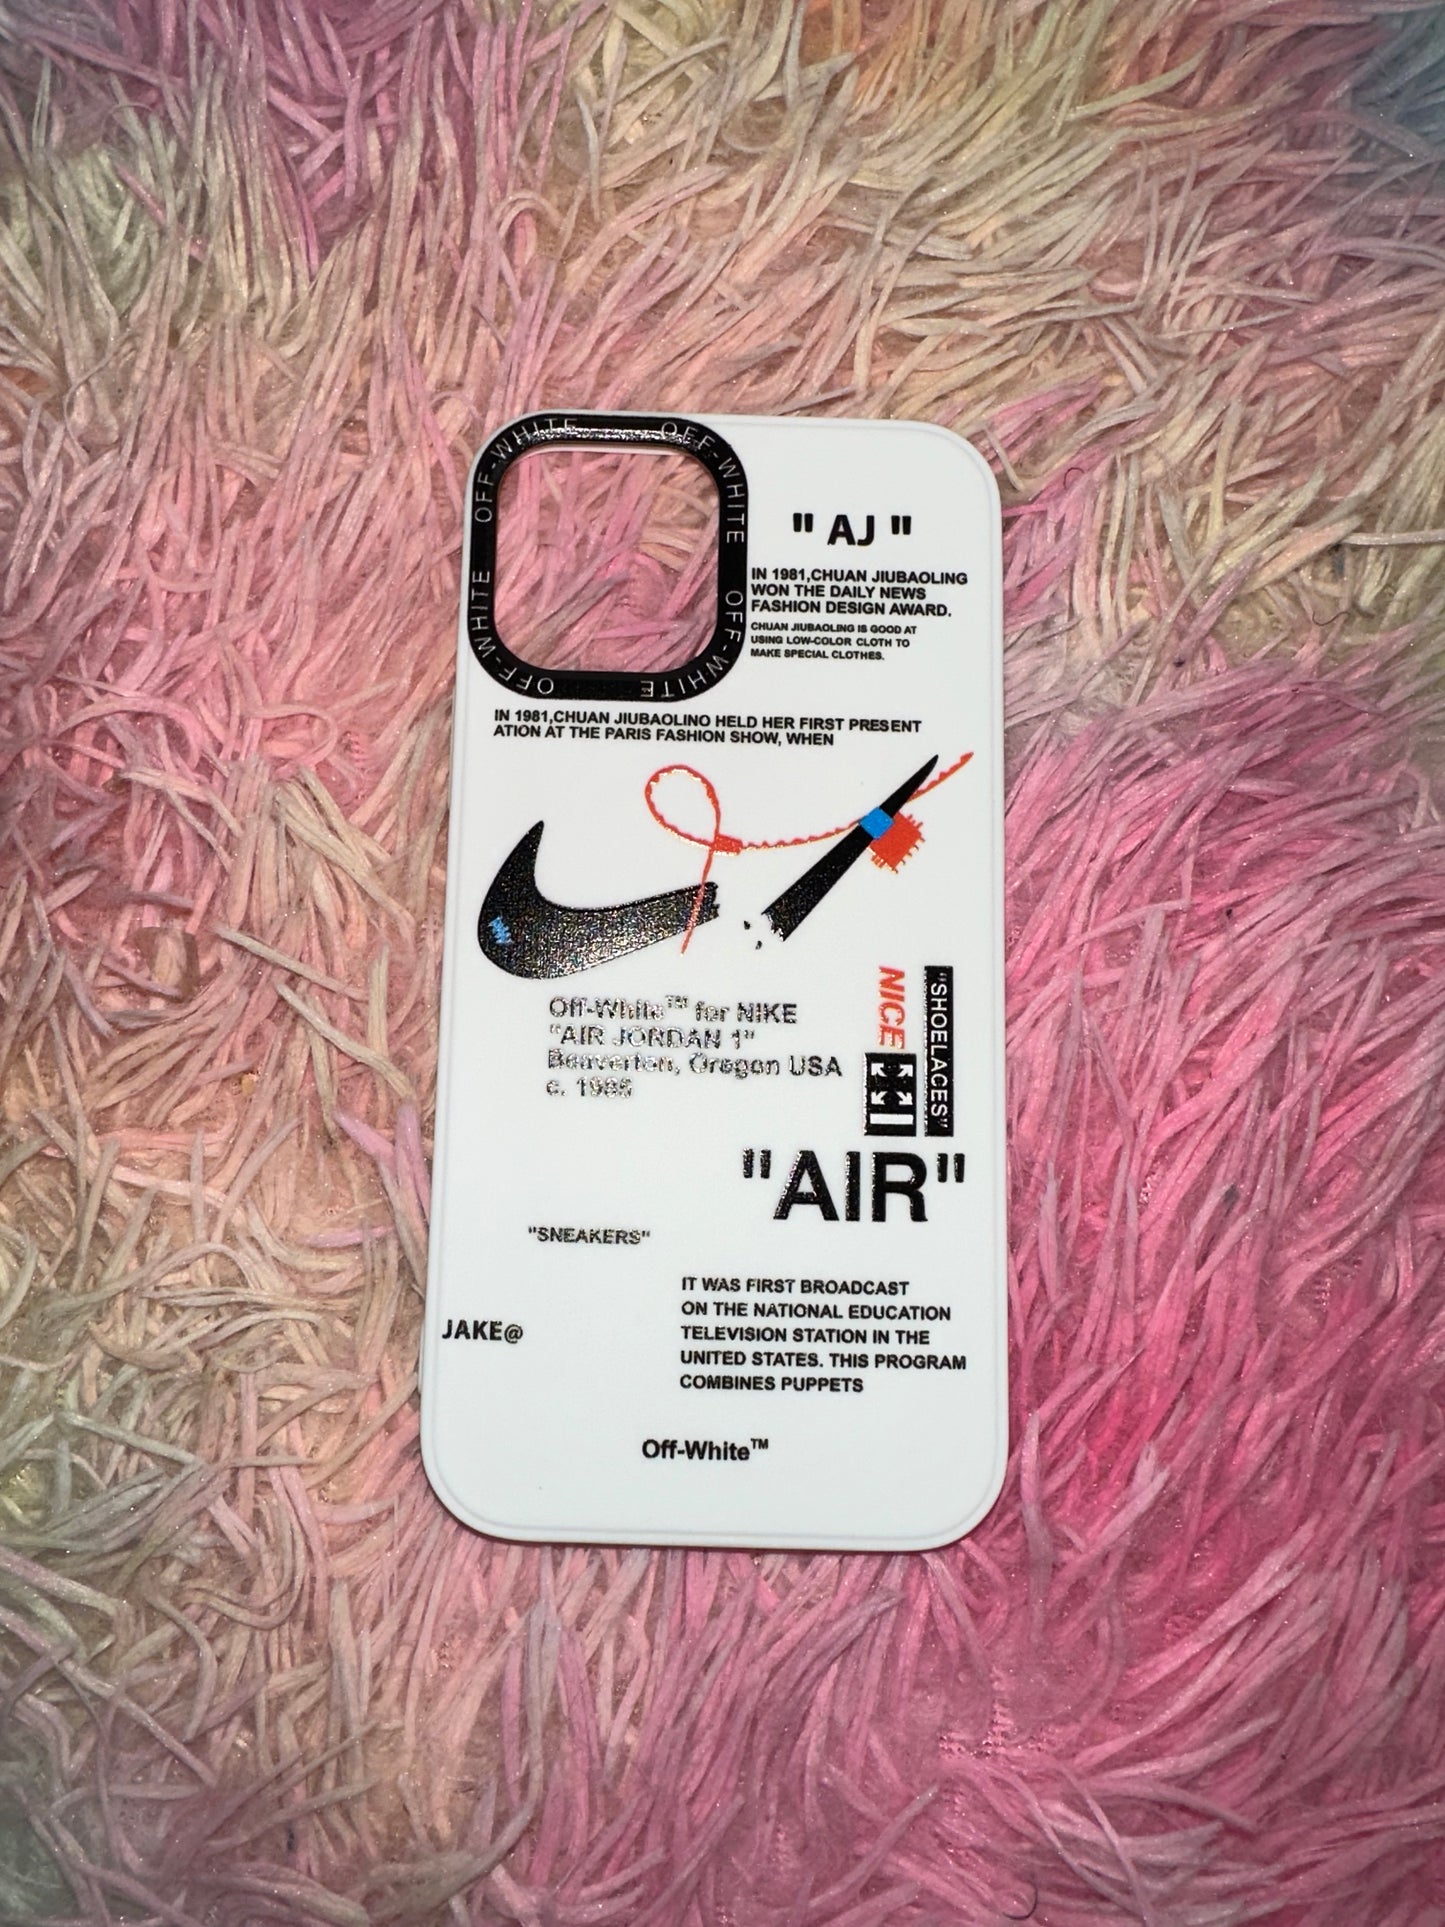 iPhone Nike Case